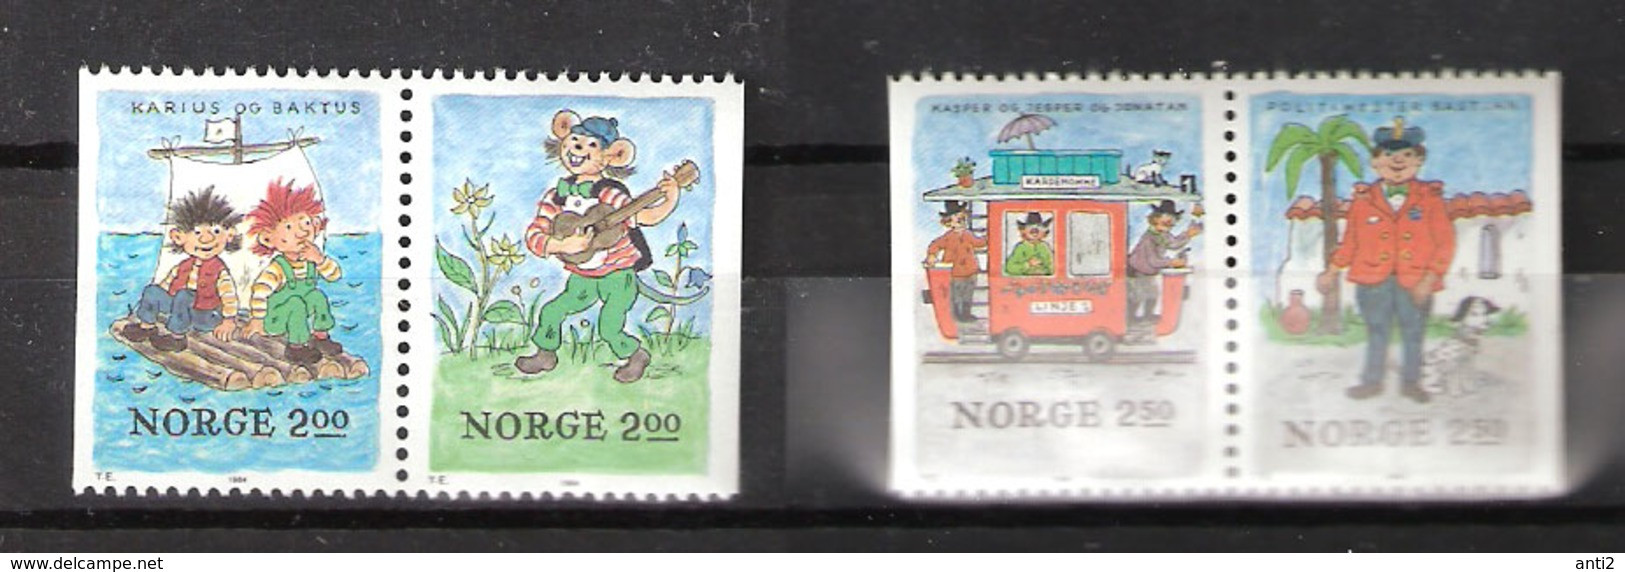 Norge Norway 1984  Christmas: Children Books Illustrations, Kardemomme By / Karius And Baktus   Mi 914-917, MNH(**) - Ungebraucht